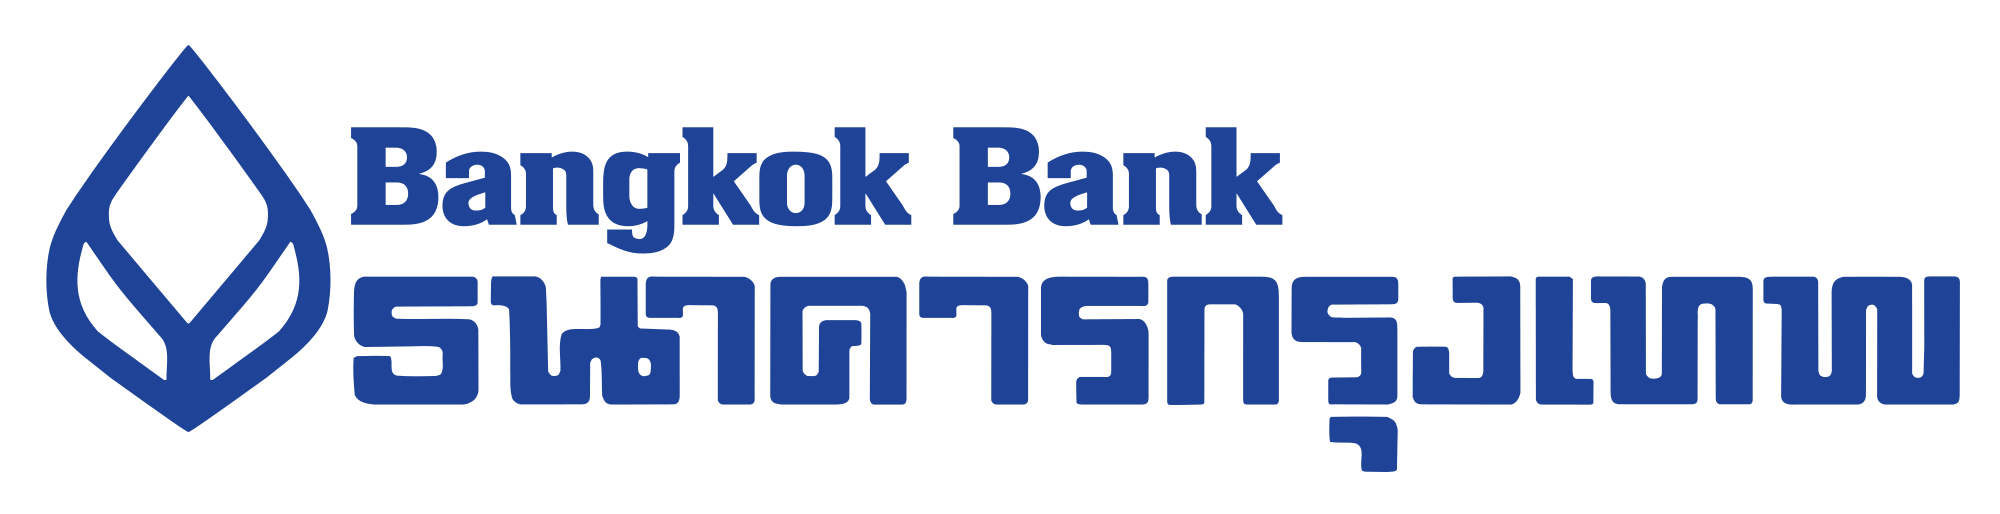 bangkok-bank.png